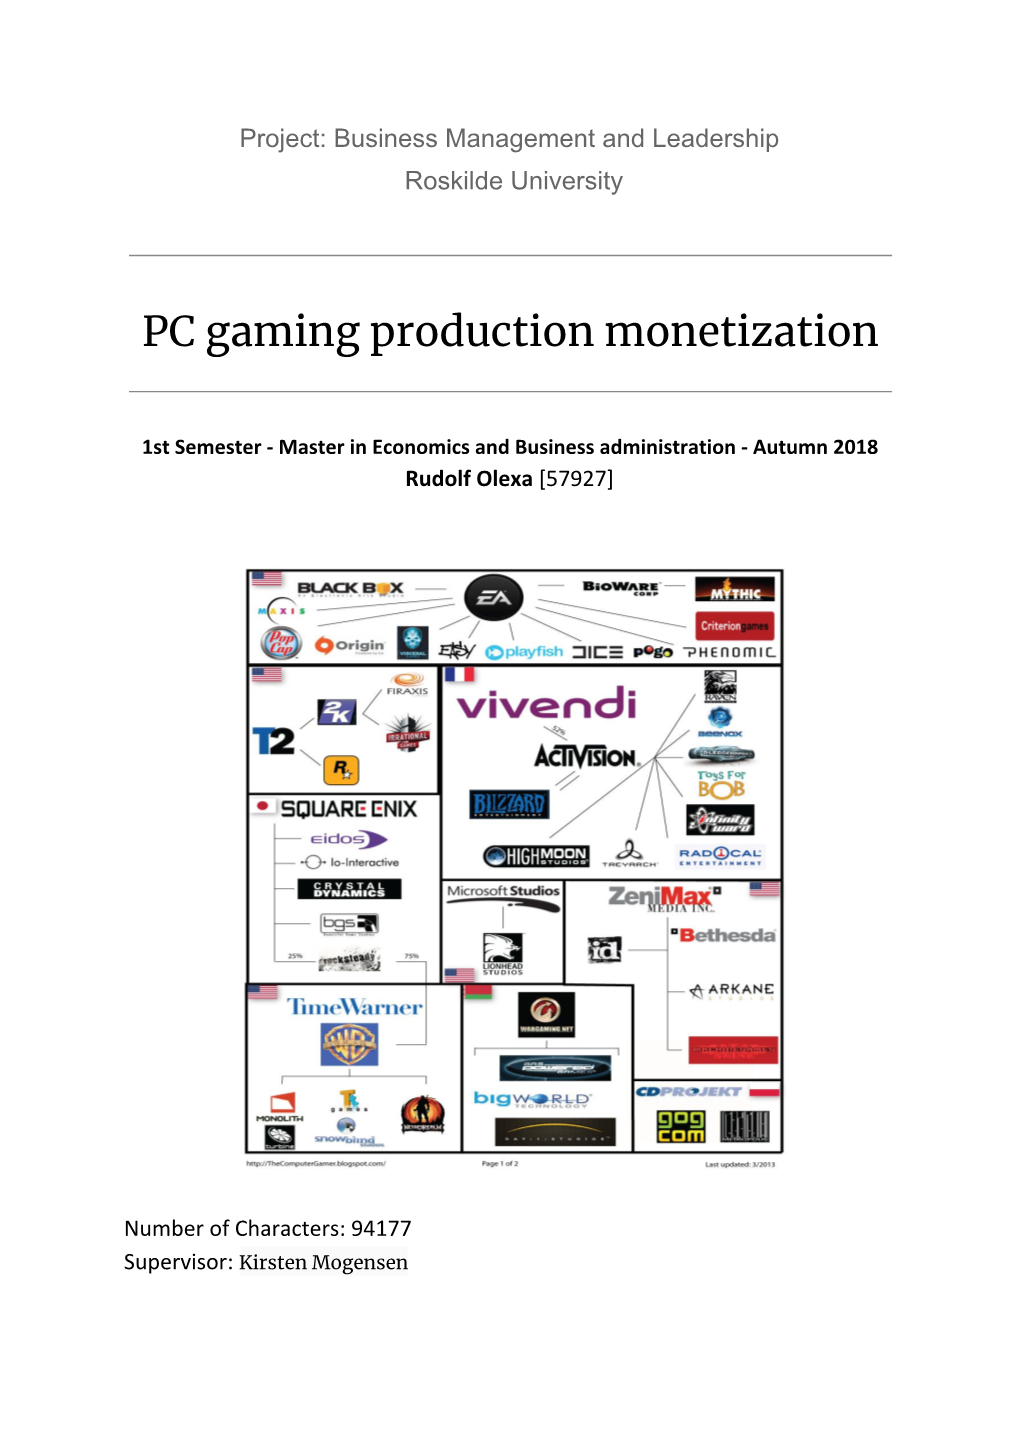 PC Gaming Production Monetization